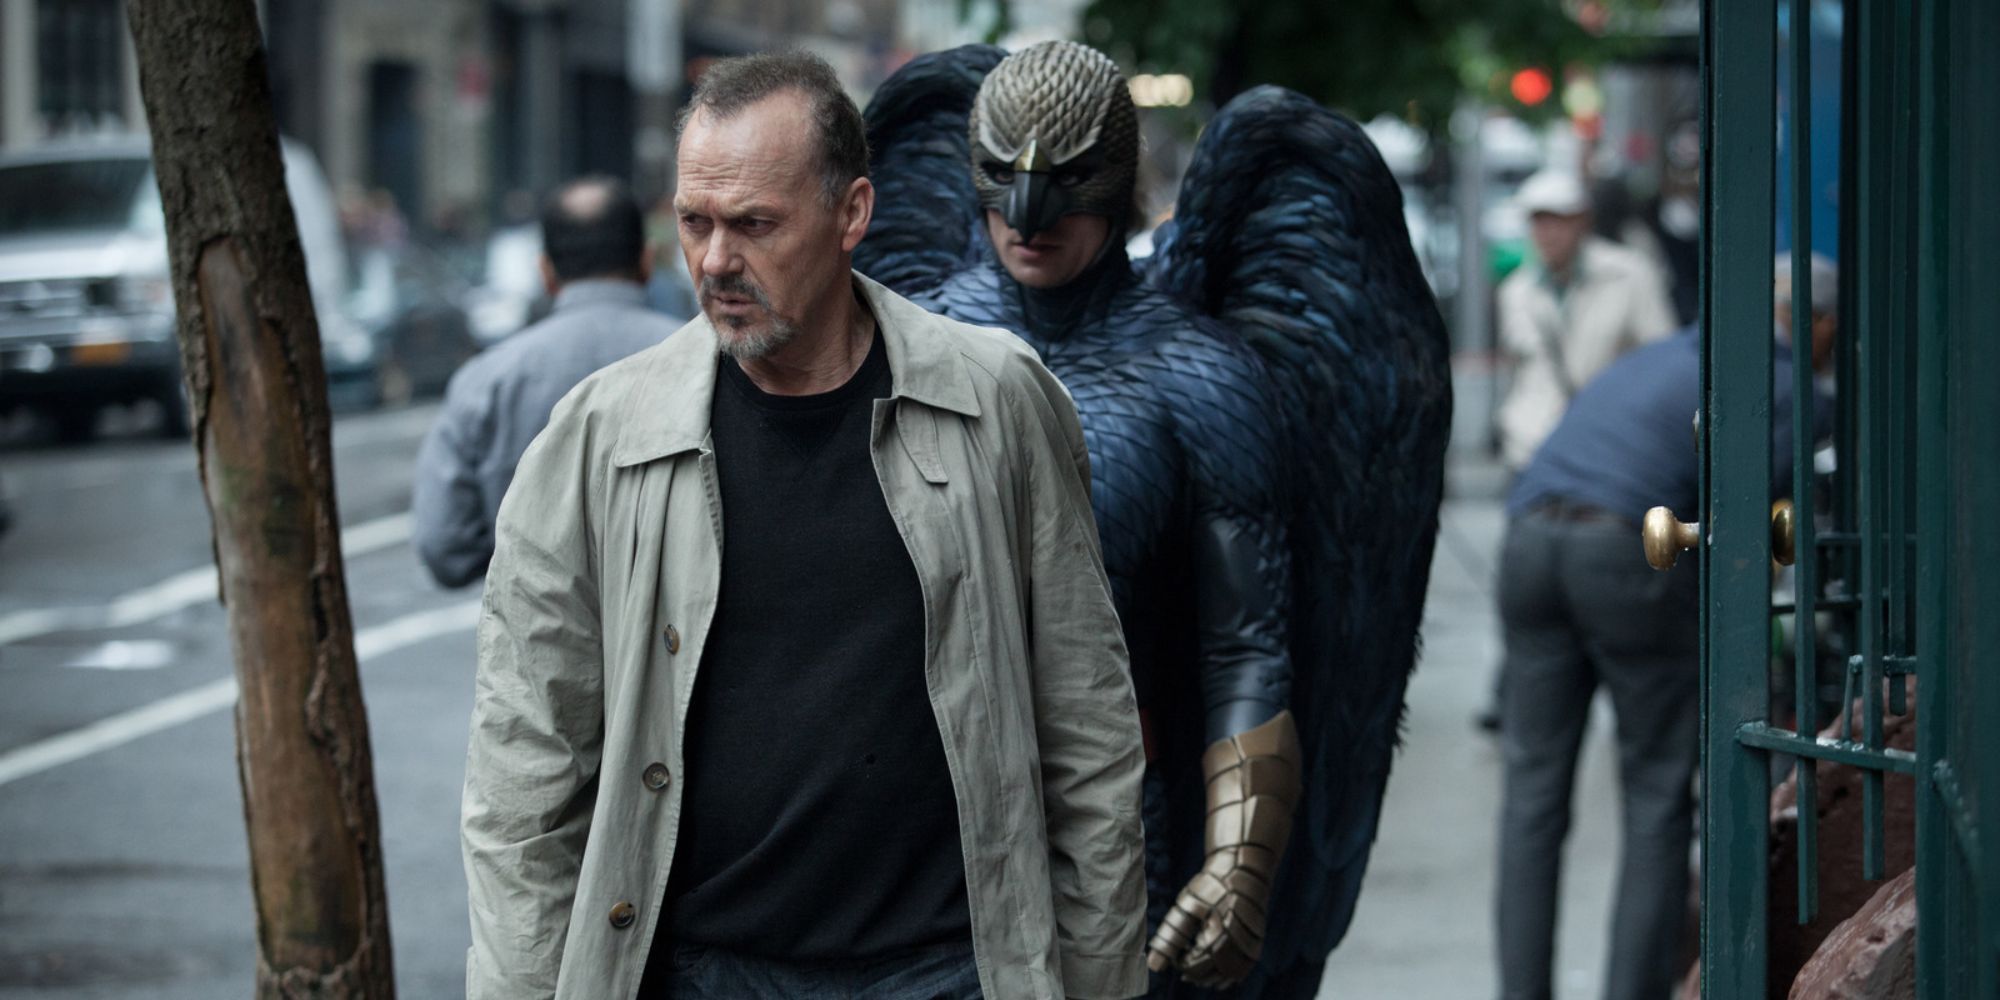 Michael Keaton's Riggan with Birdman behind him